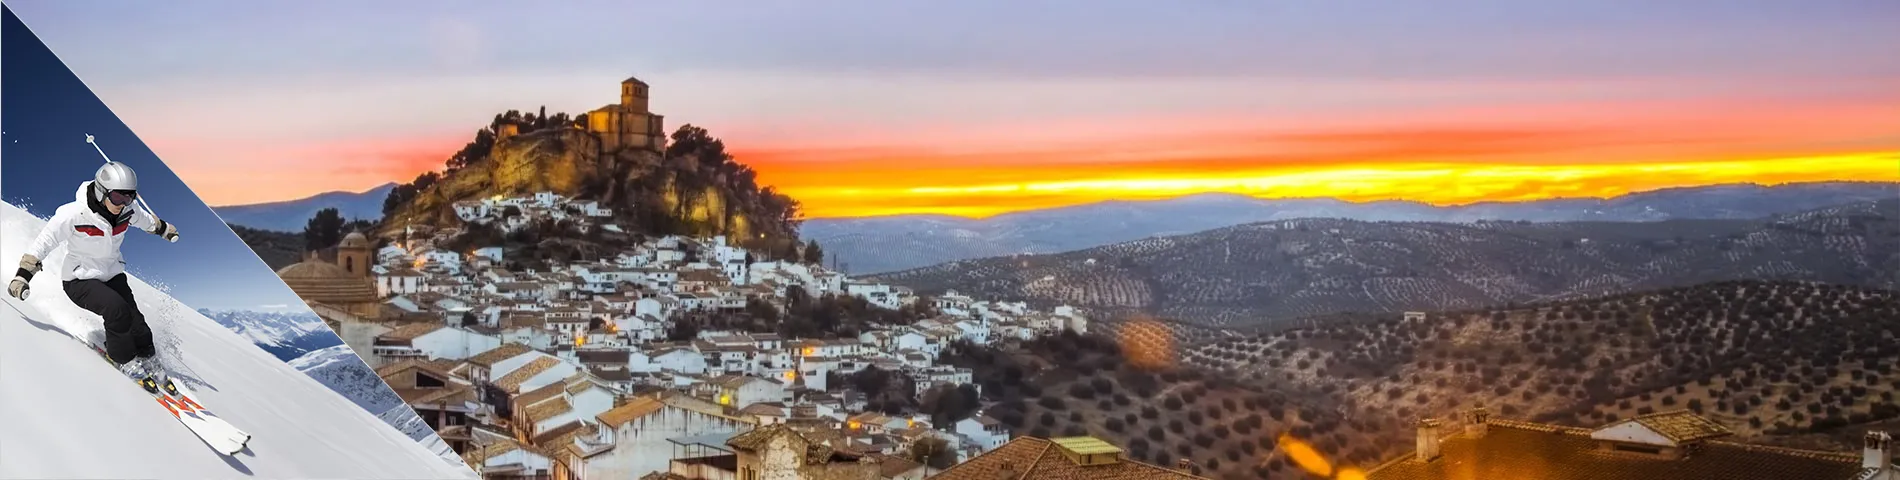 Granada - Spanisch & Ski